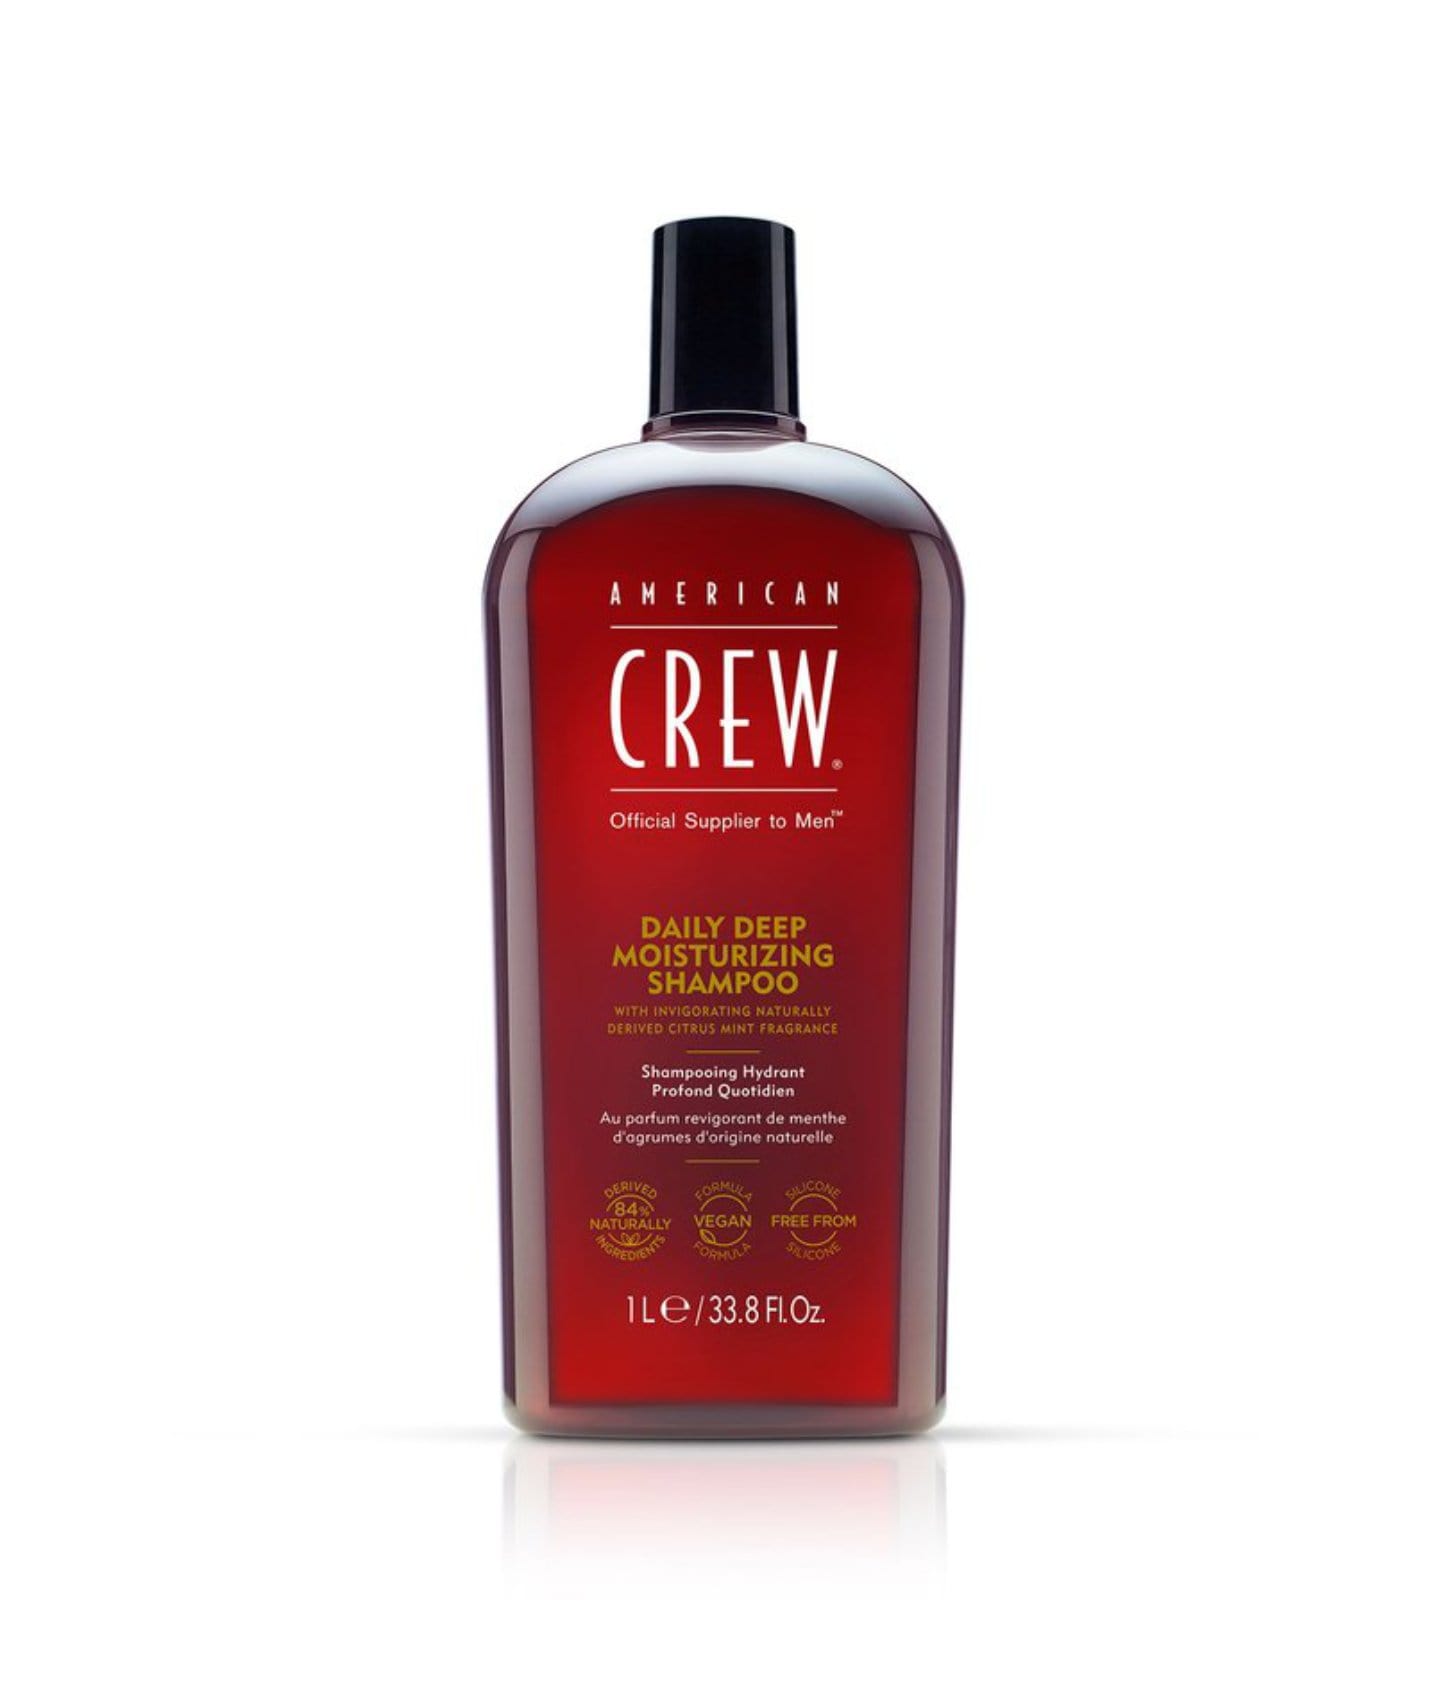 American Crew Daily Deep Moisturizing Shampoo - Sagema